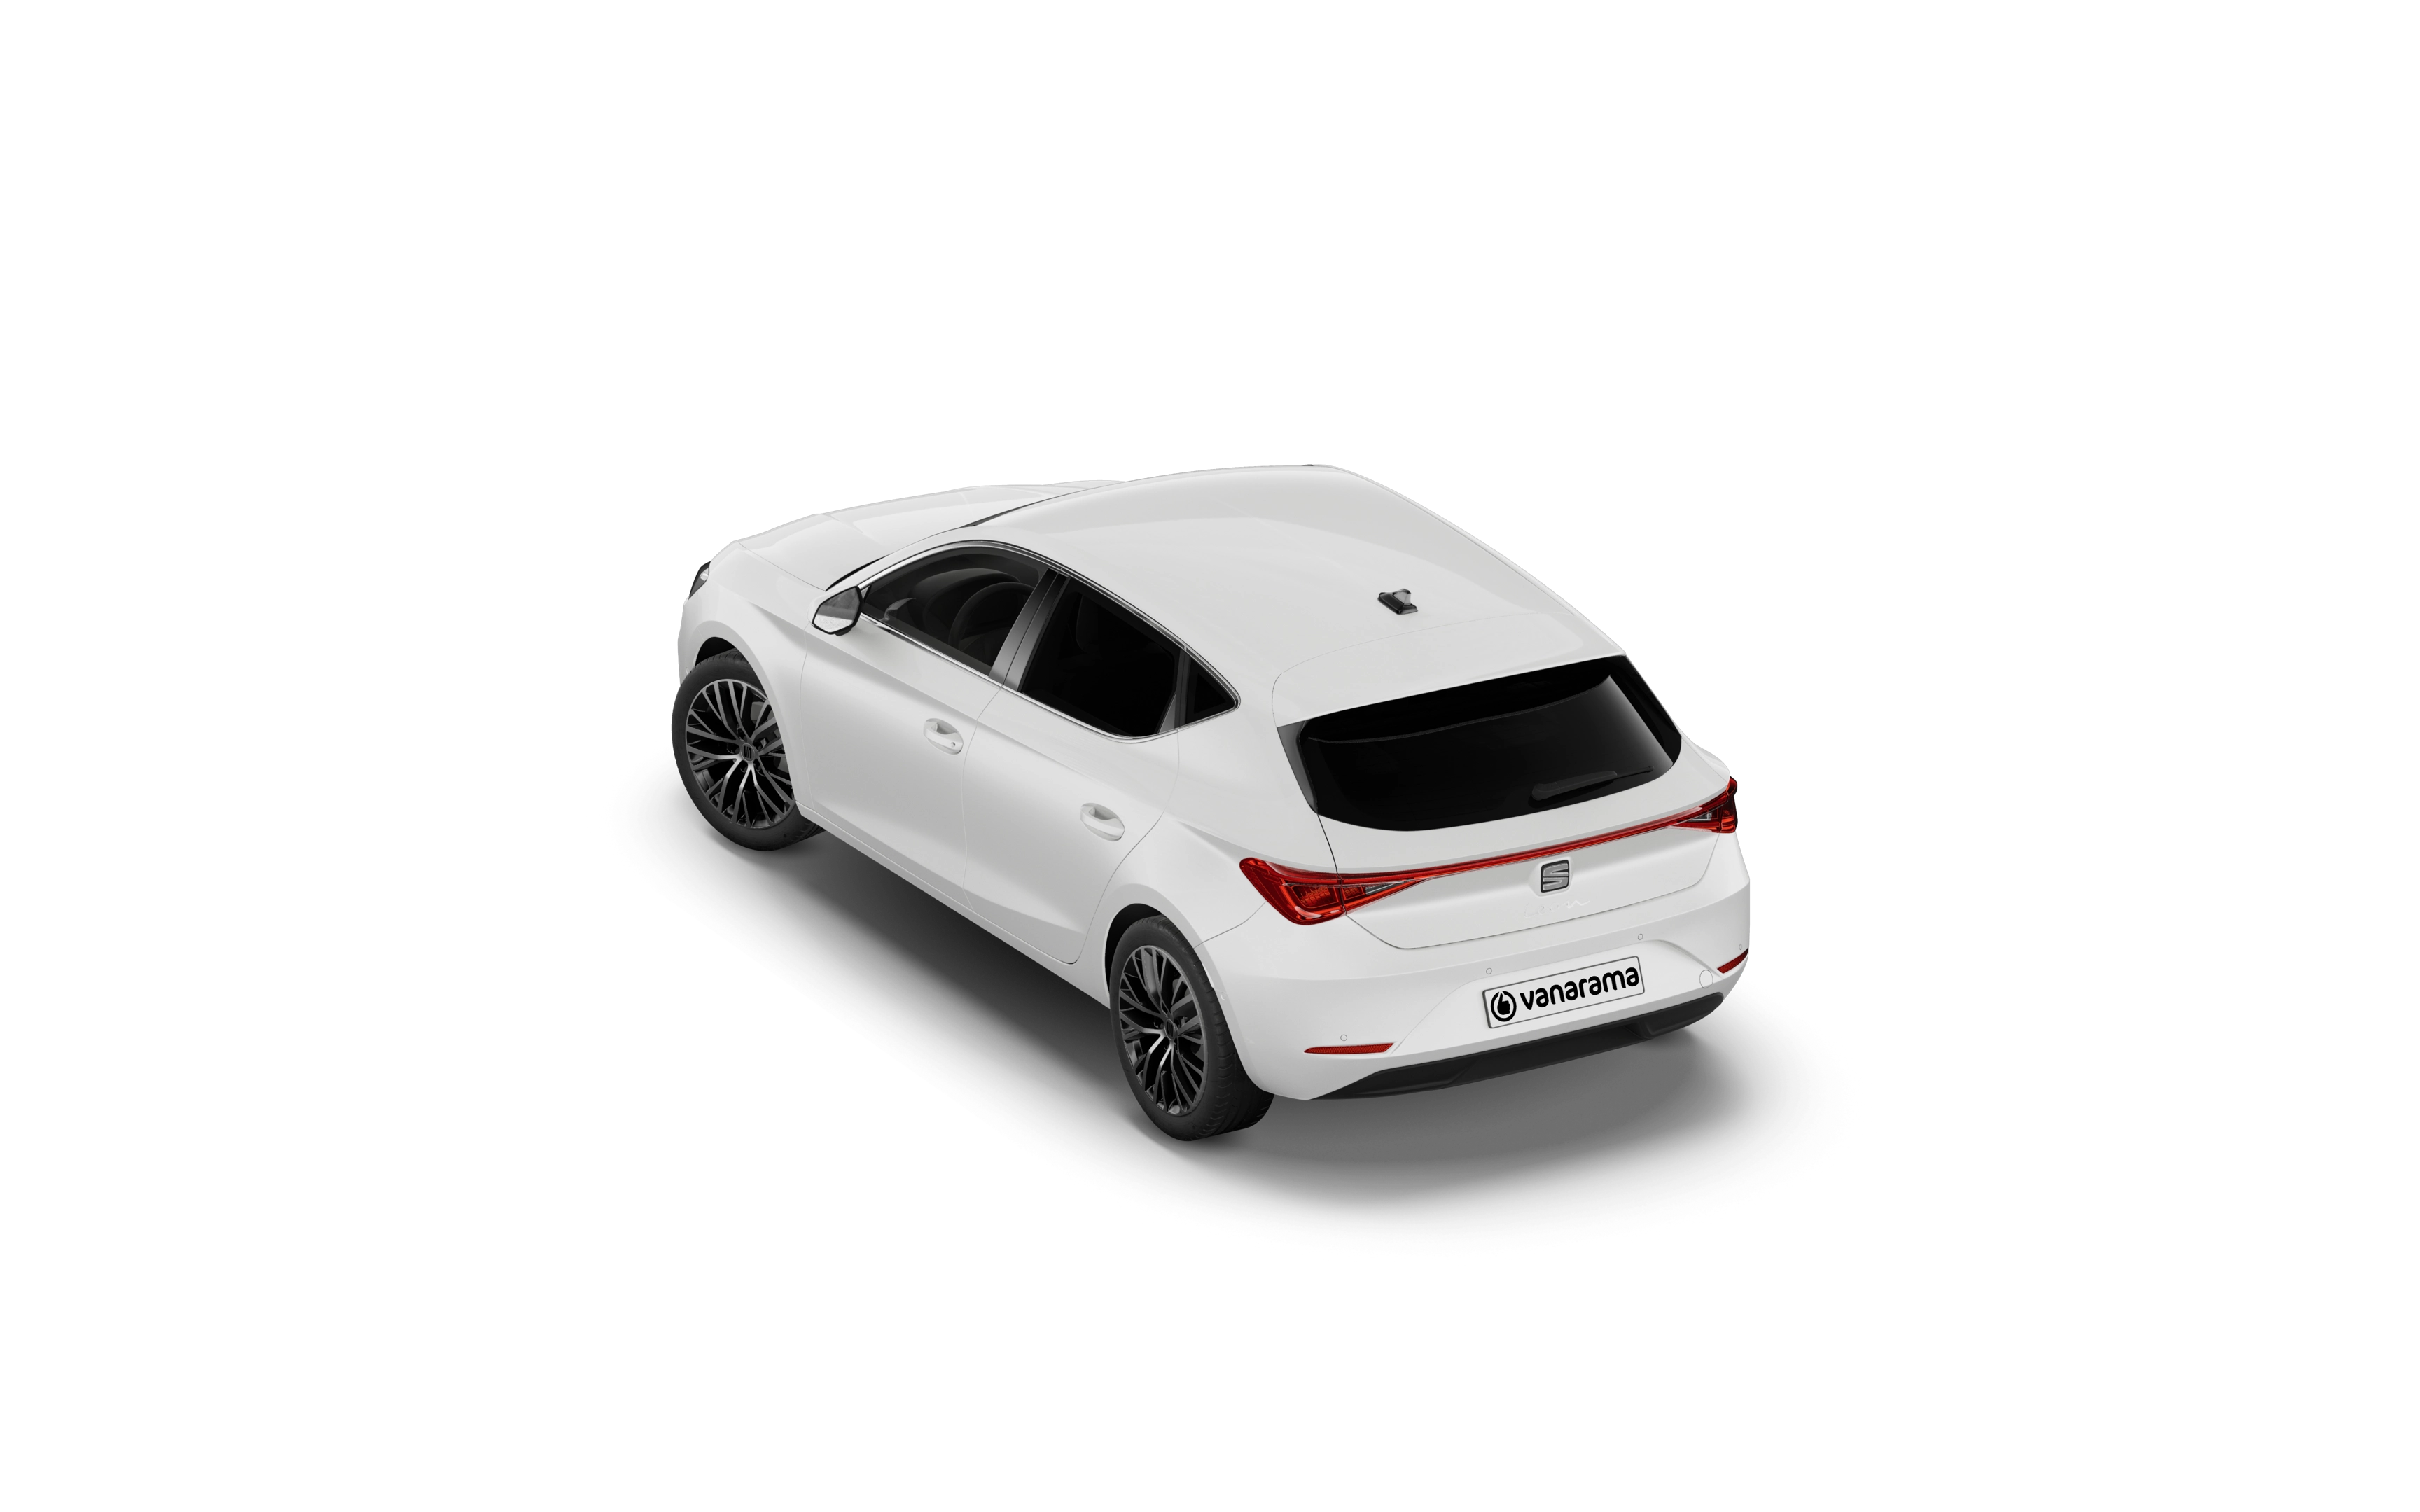 Seat leon hatchback 2.0 tdi se dynamic 5 doors